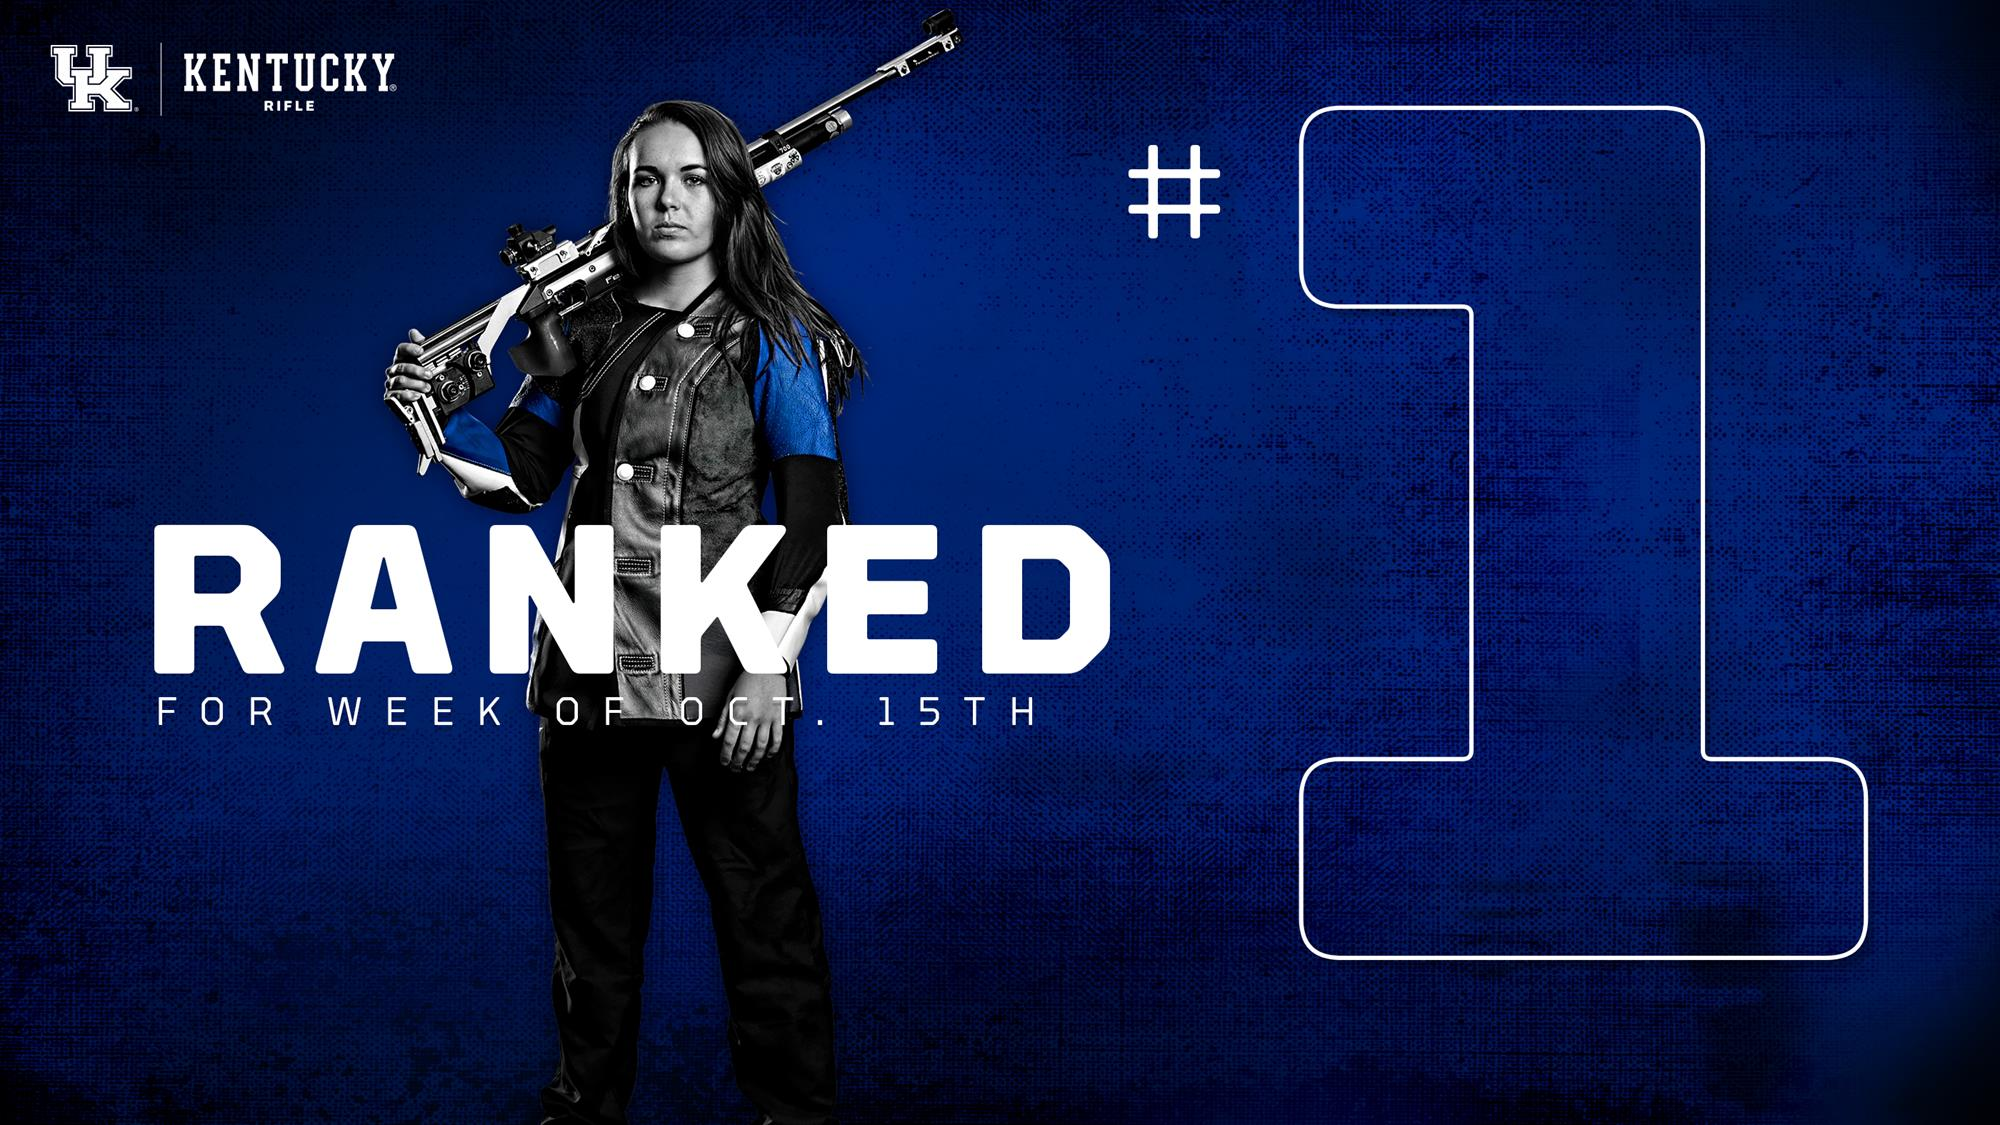 Kentucky Rifle Up to No. 1 Ranking